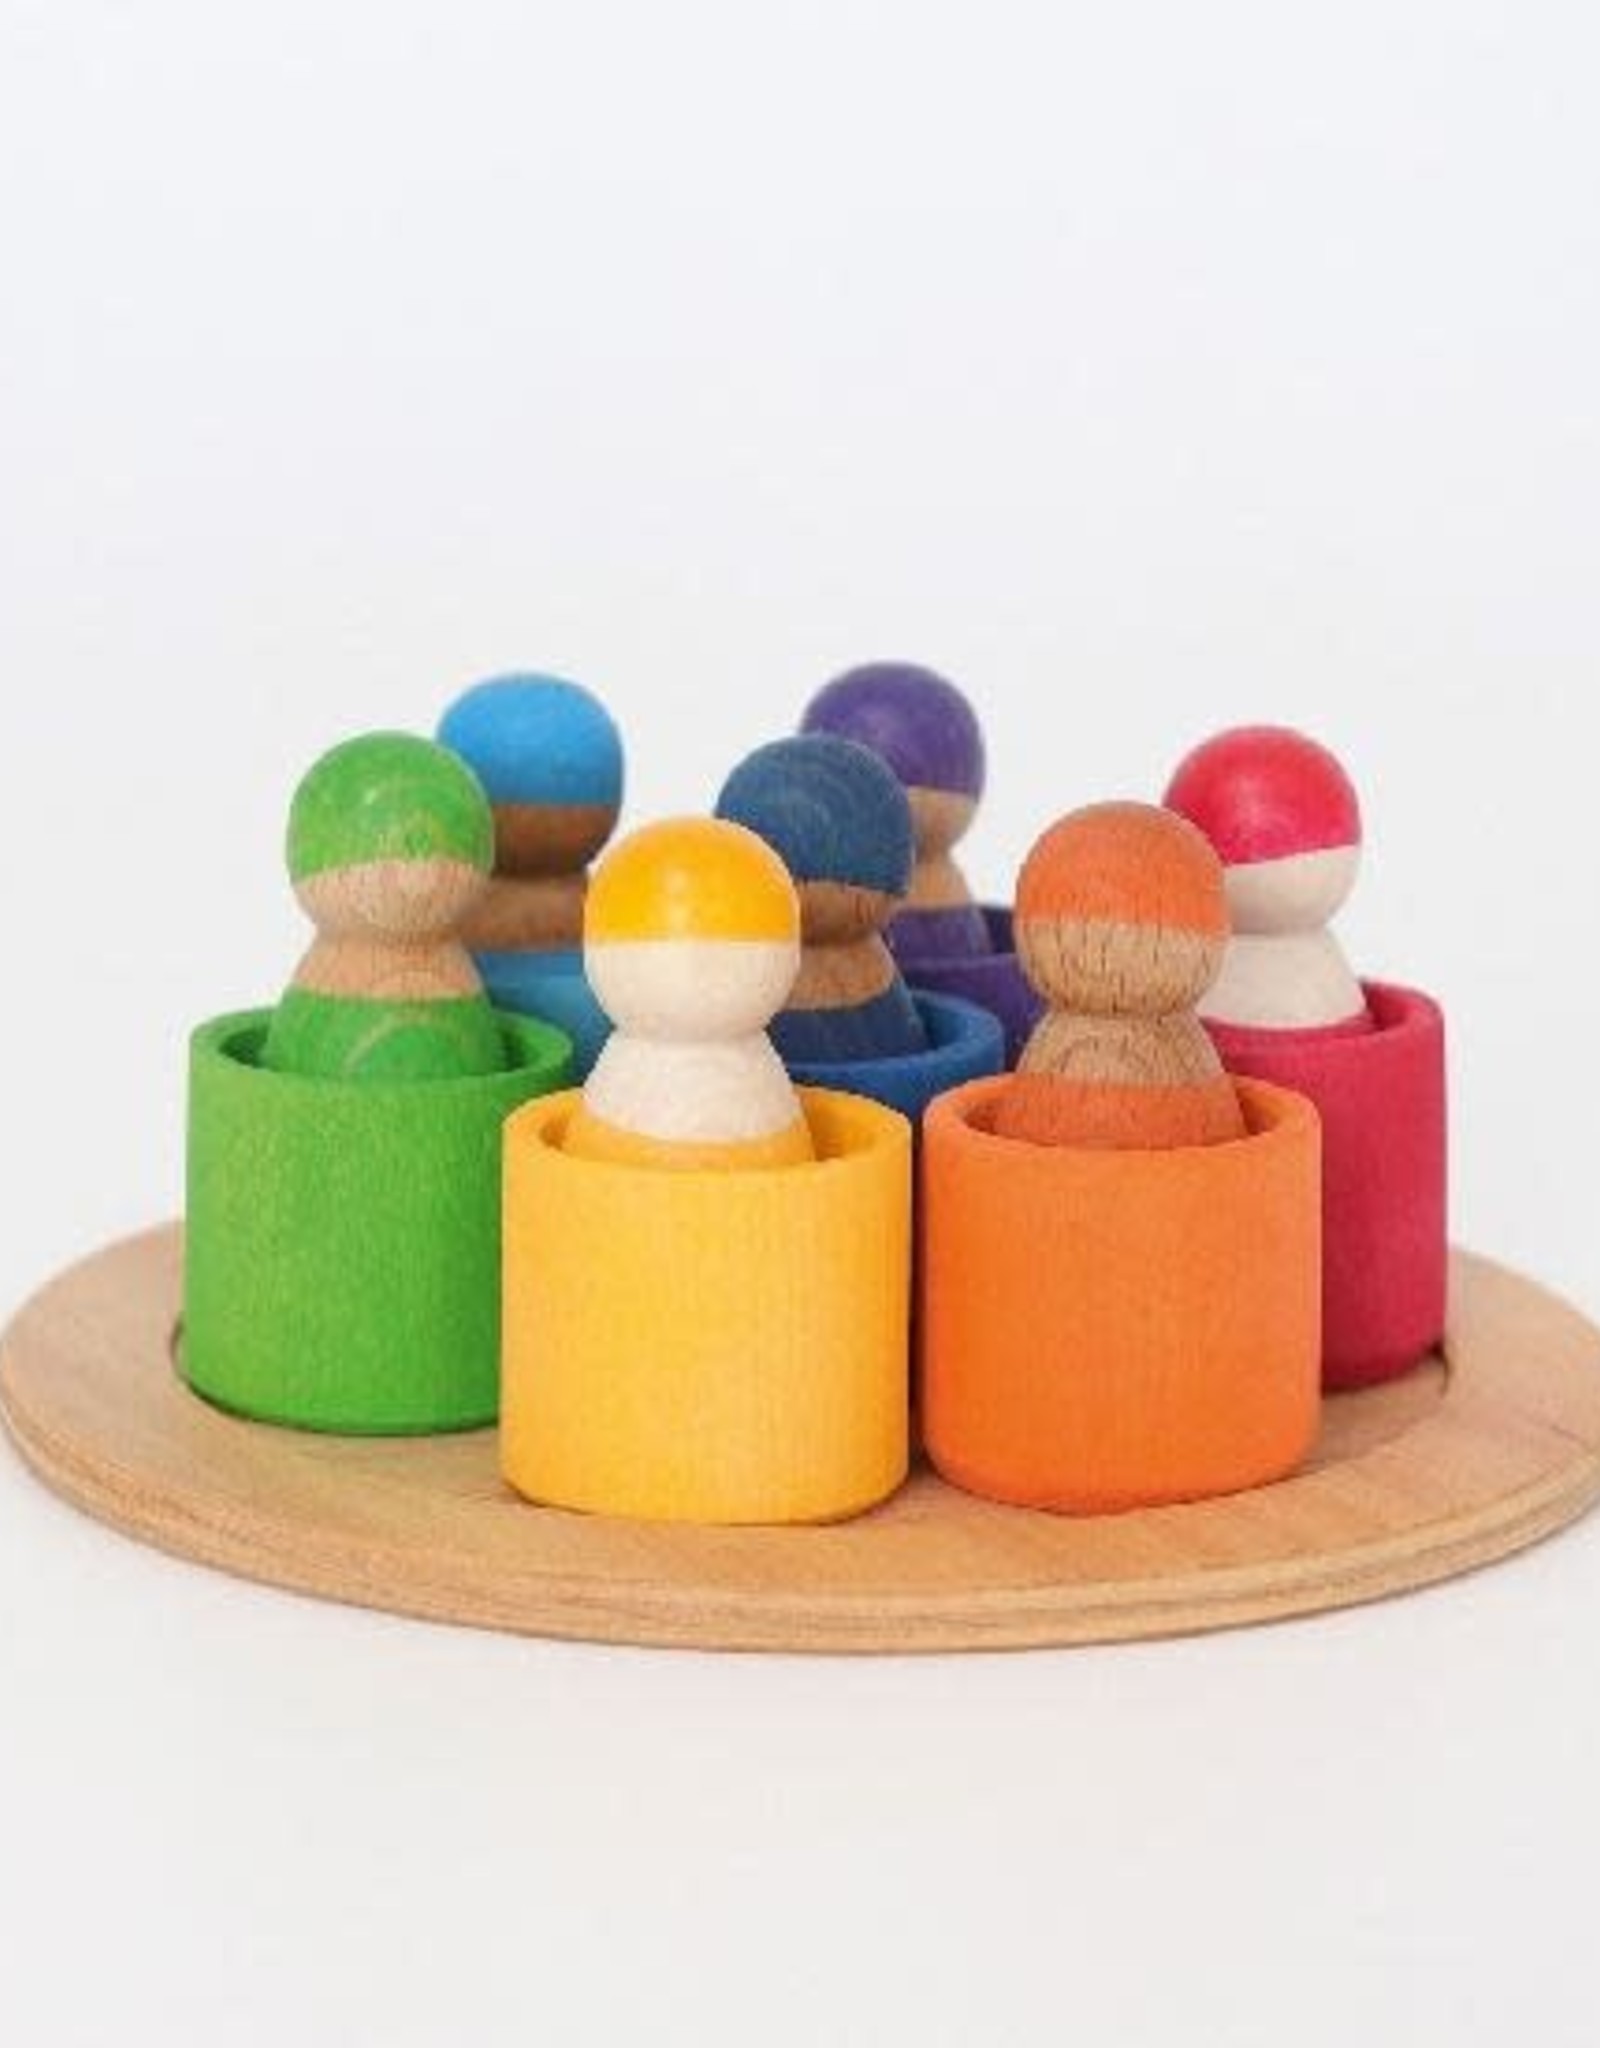 GRIMM's Spiel & Holz Design Grimm's 7 Rainbow Friends in 7 Bowls